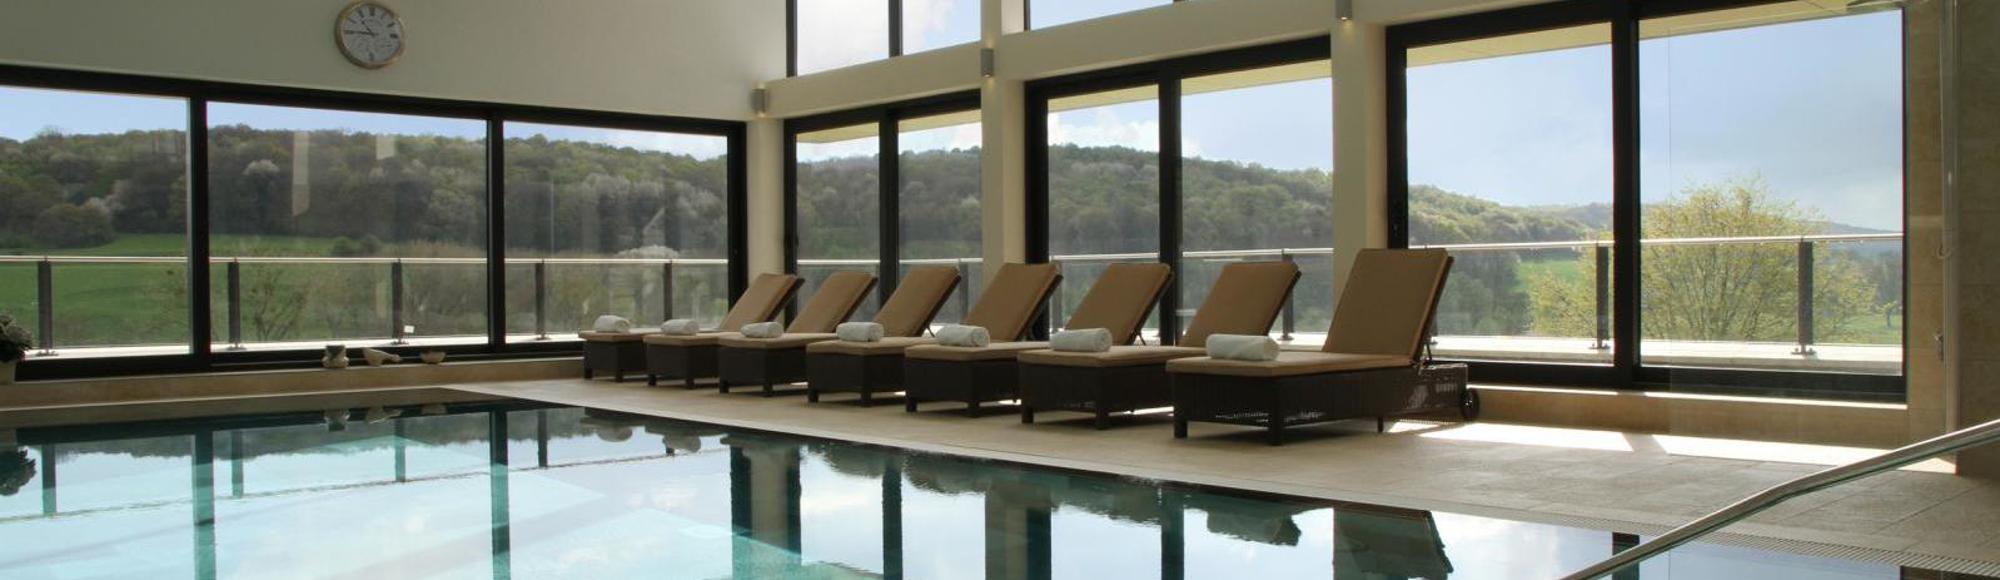 Ligbedden bij binnenzwembad en panorama uitzicht Hotel Klein Zwitserland